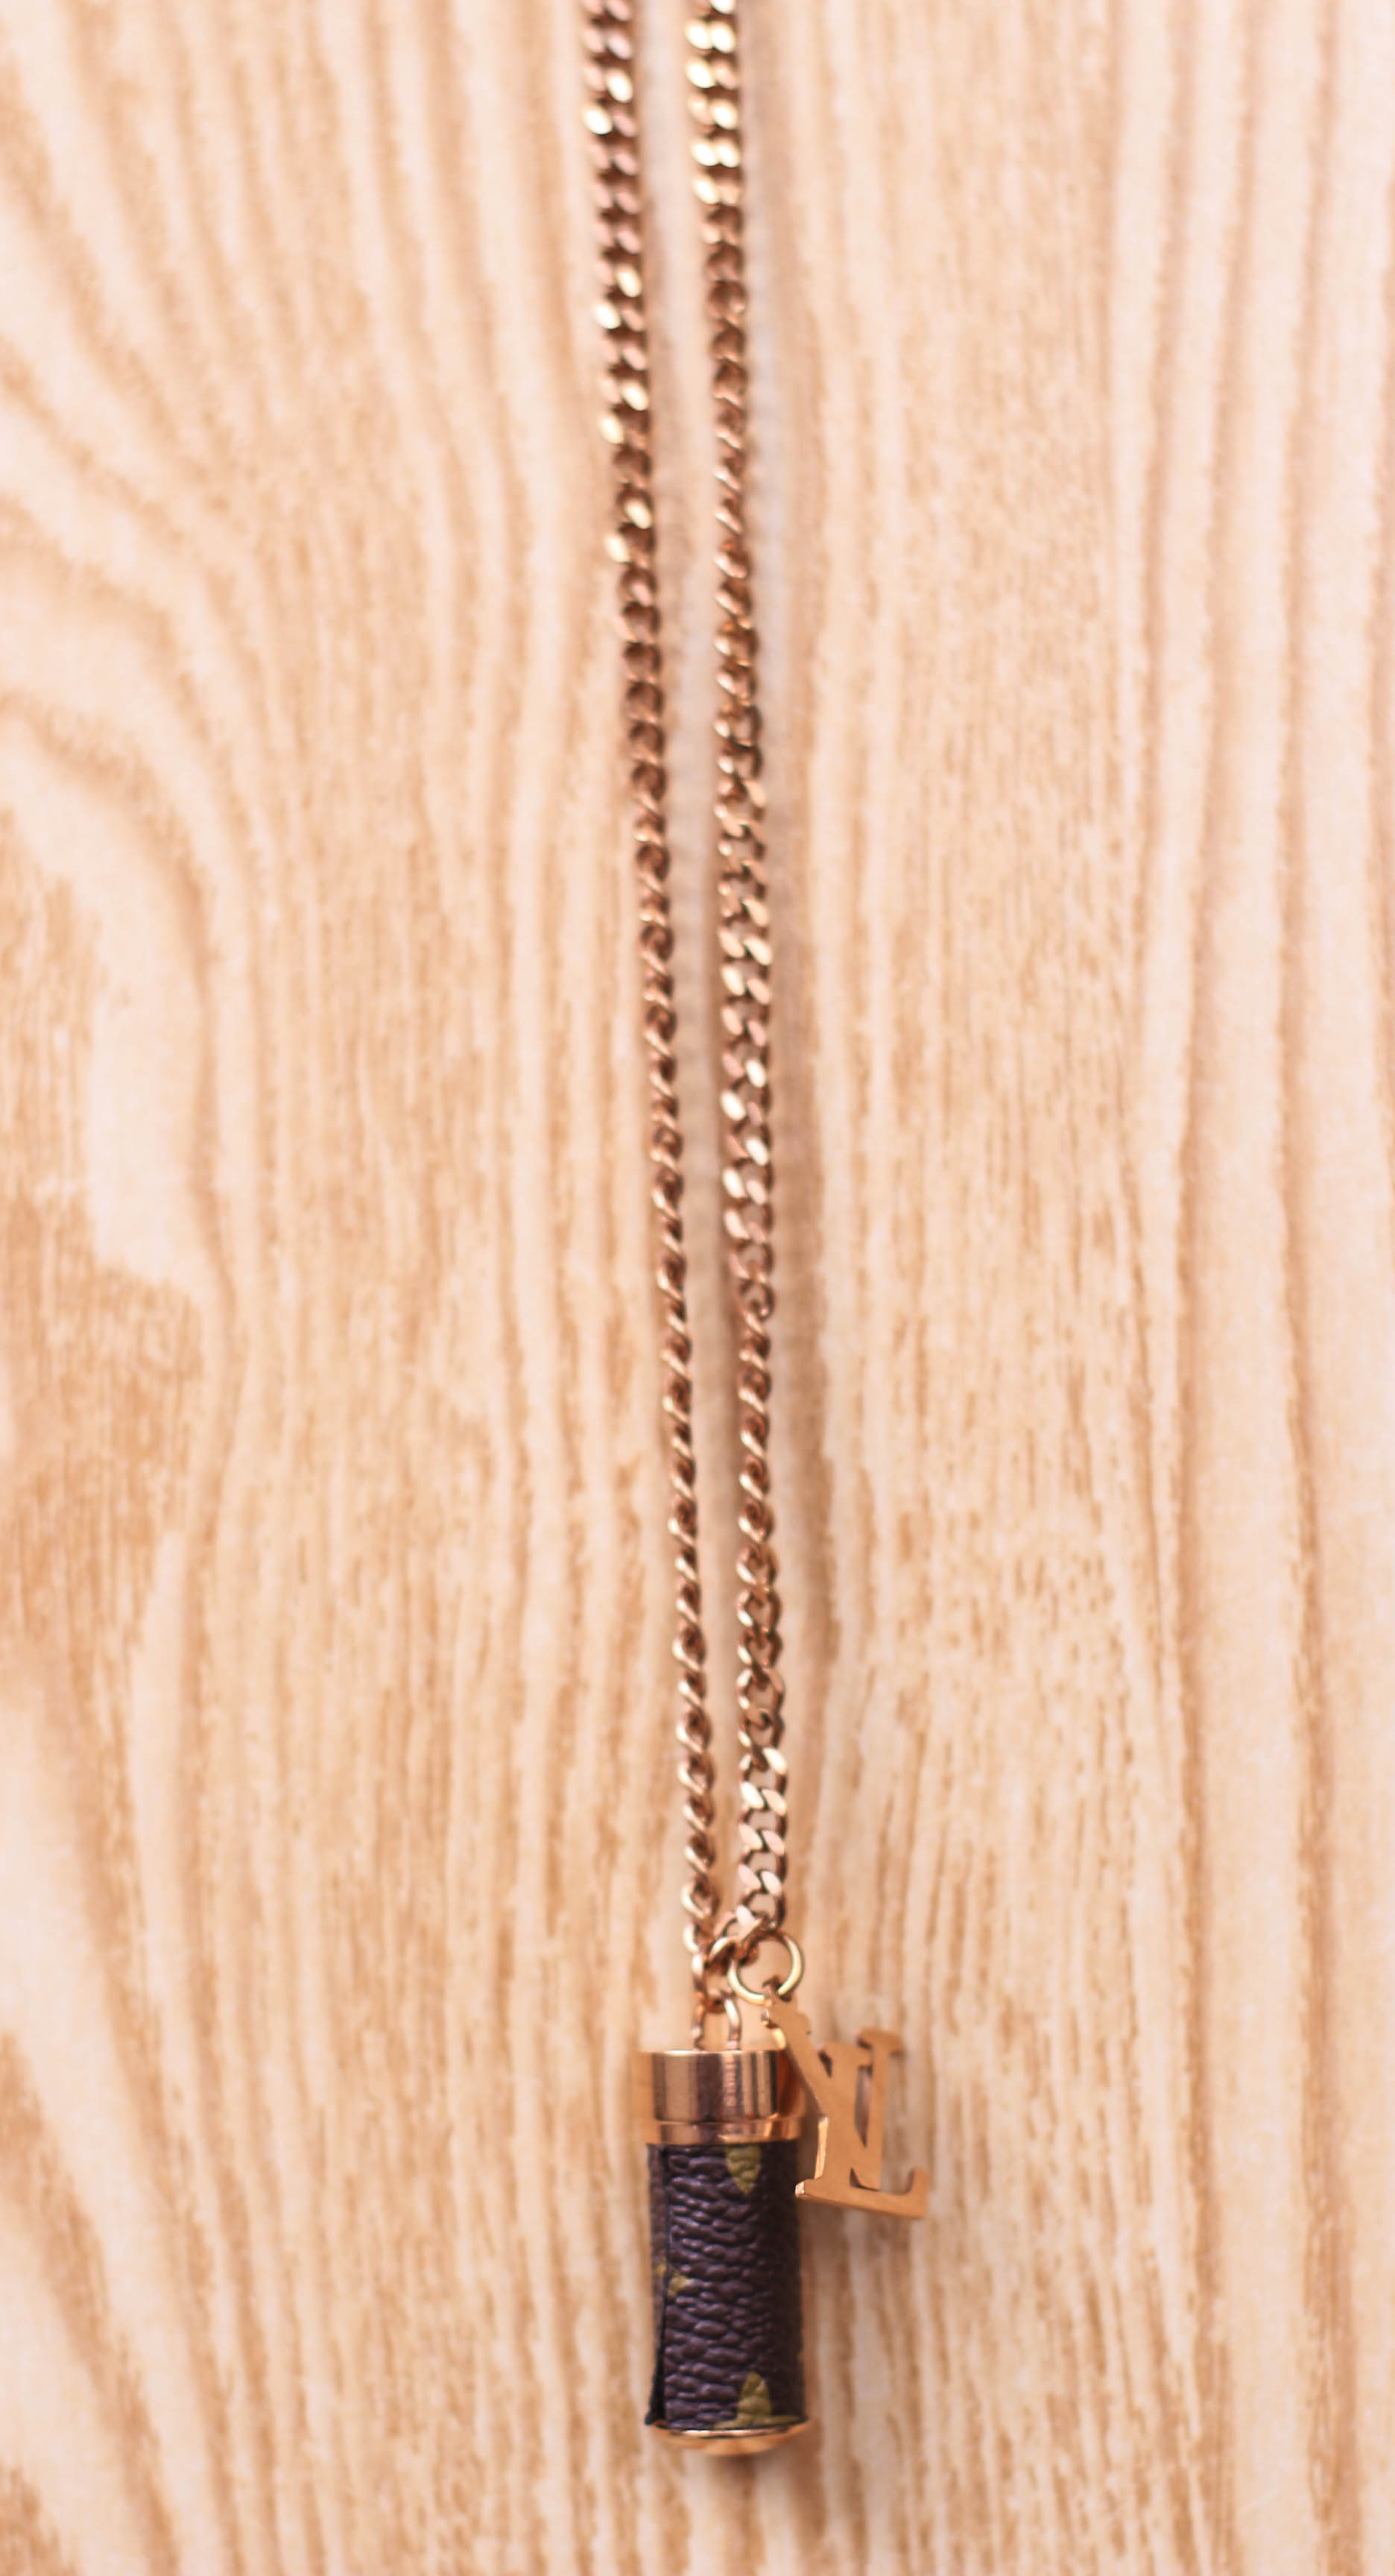 Louis Vuitton Layered Necklaces